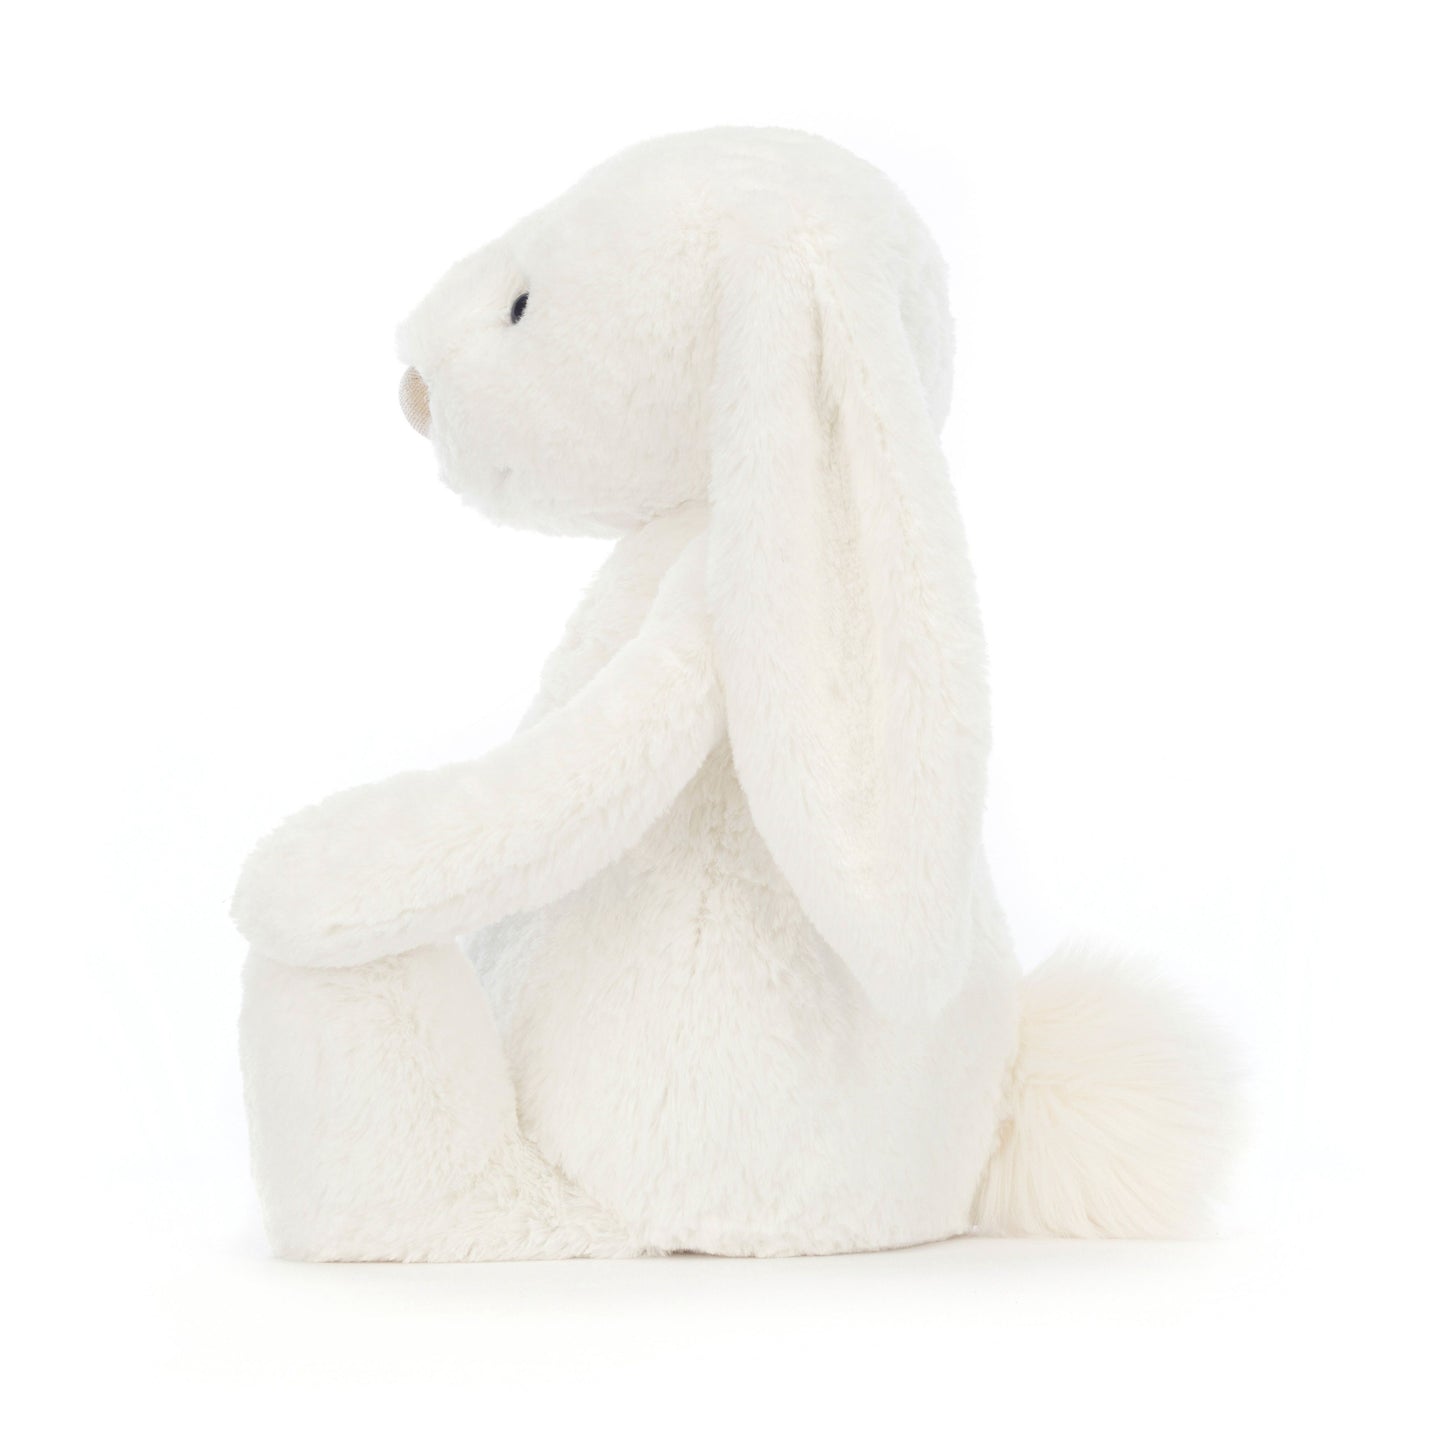 Baby Jellycat Bashful kanin, creme 36 cm